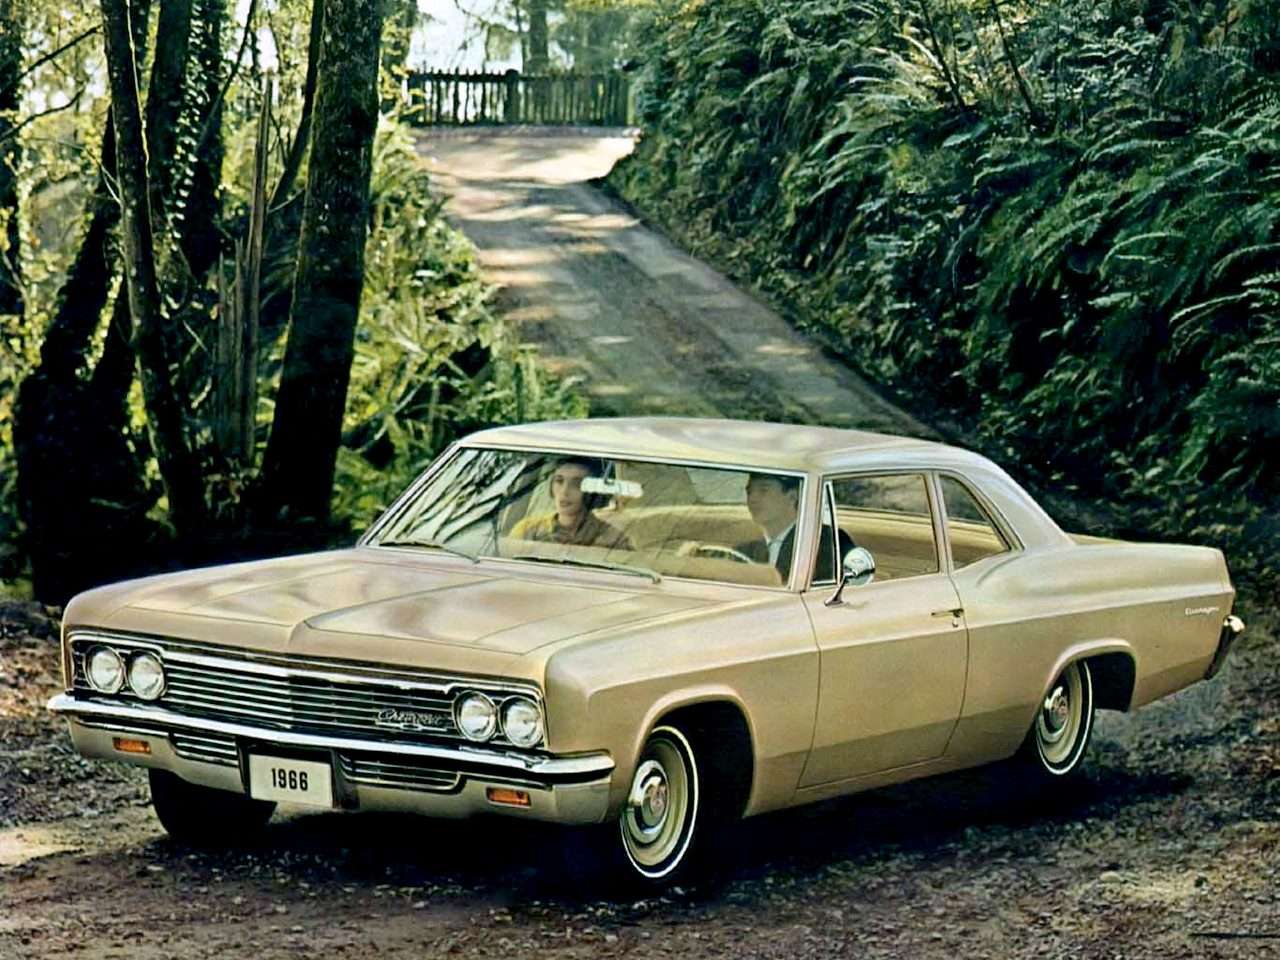 1966 Chevrolet Biscayne 2-deurs sedan online puzzel